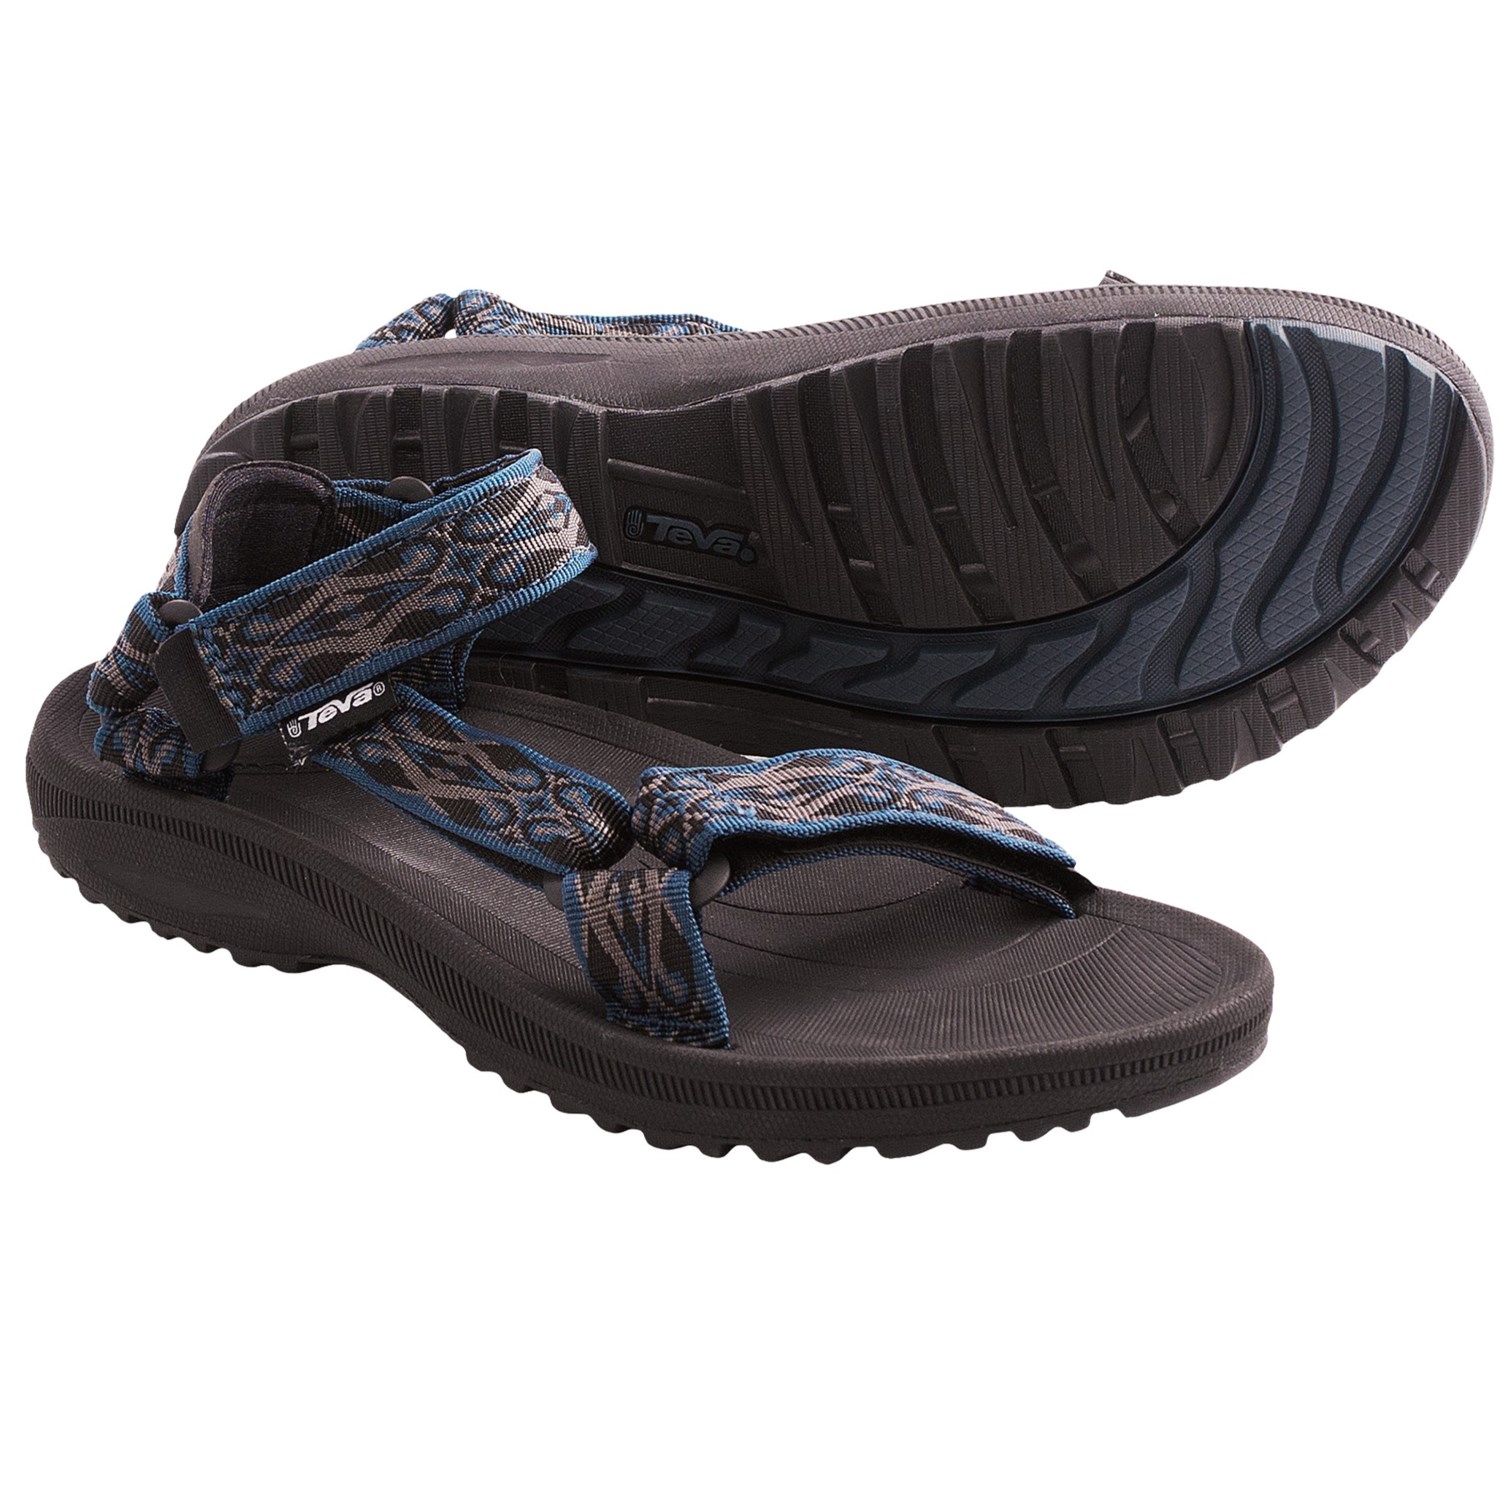 Teva Torin Sport Sandals (For Men) in Panjea Blue